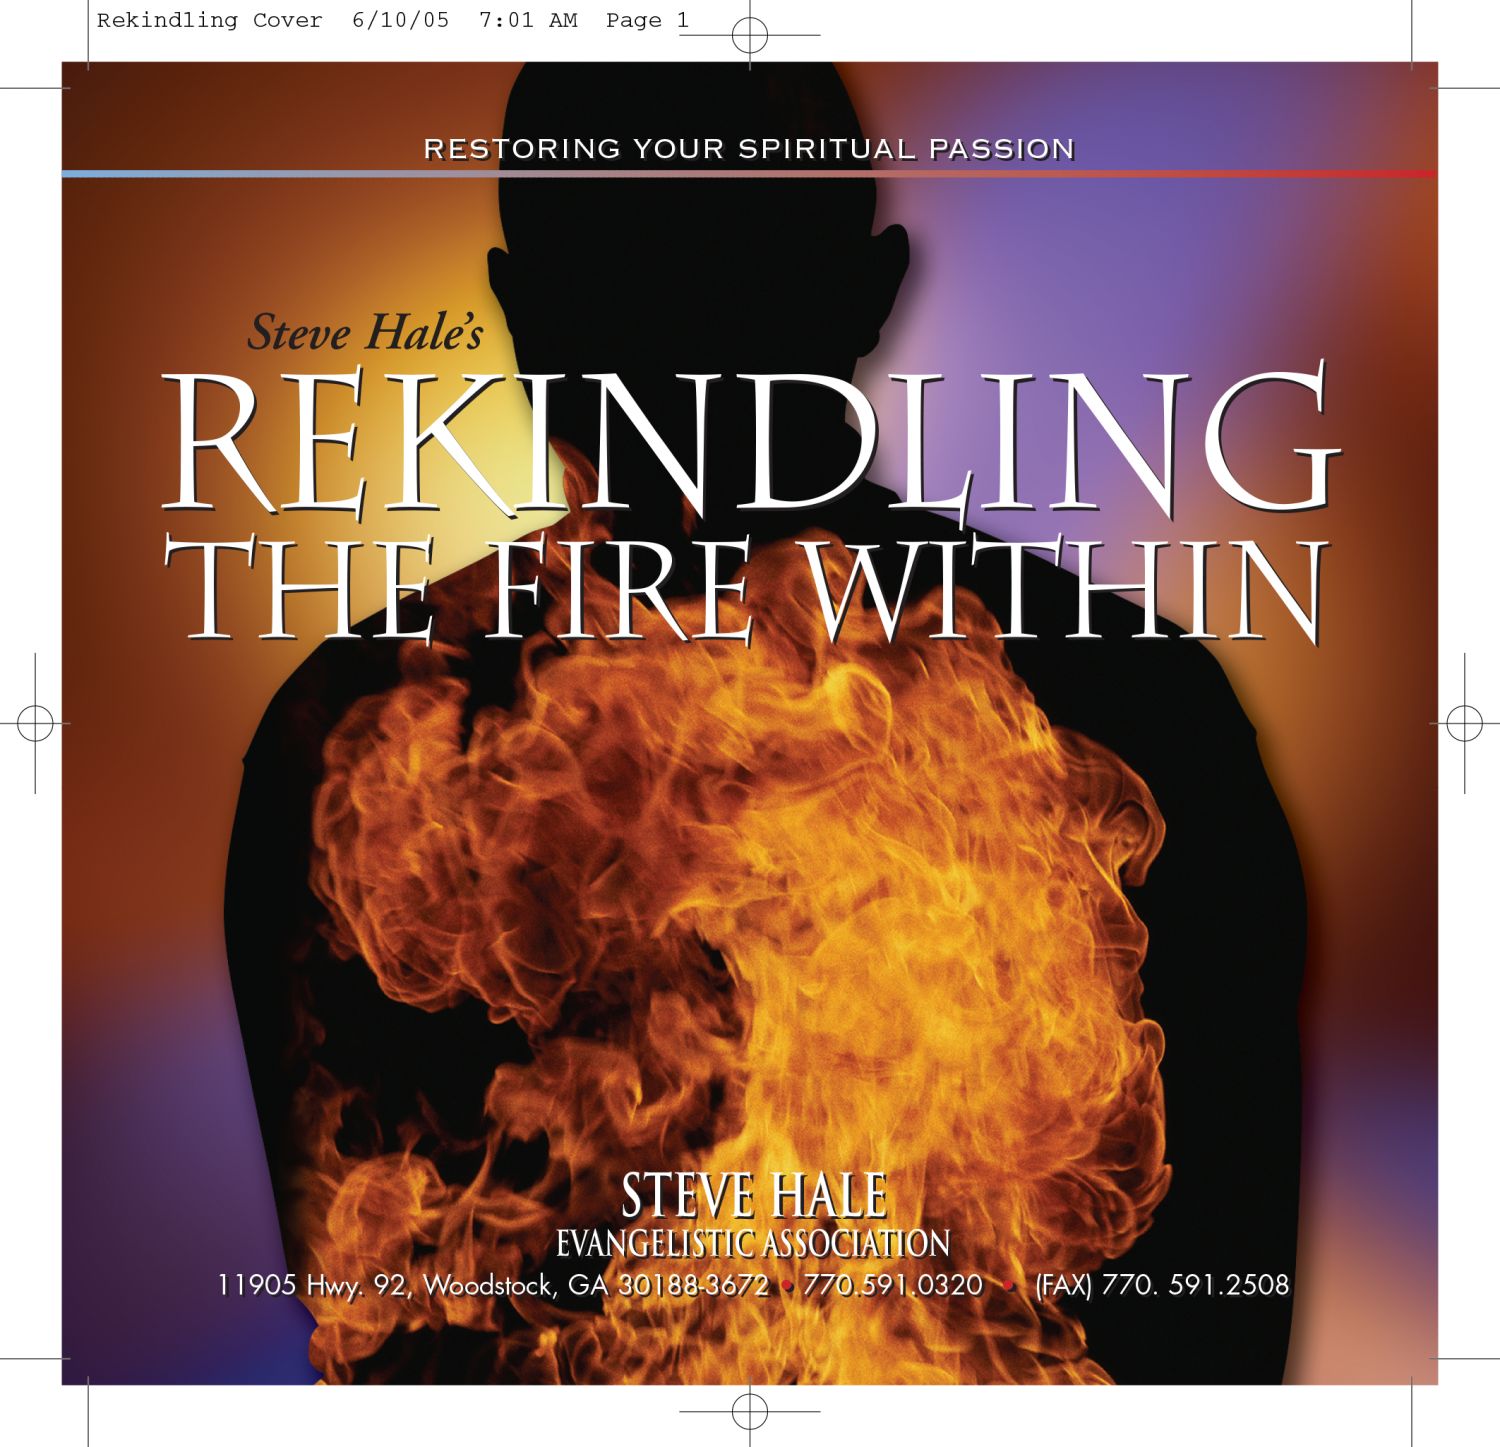 Rekindling the Fire Within - Steve Hale Evangelistic Association